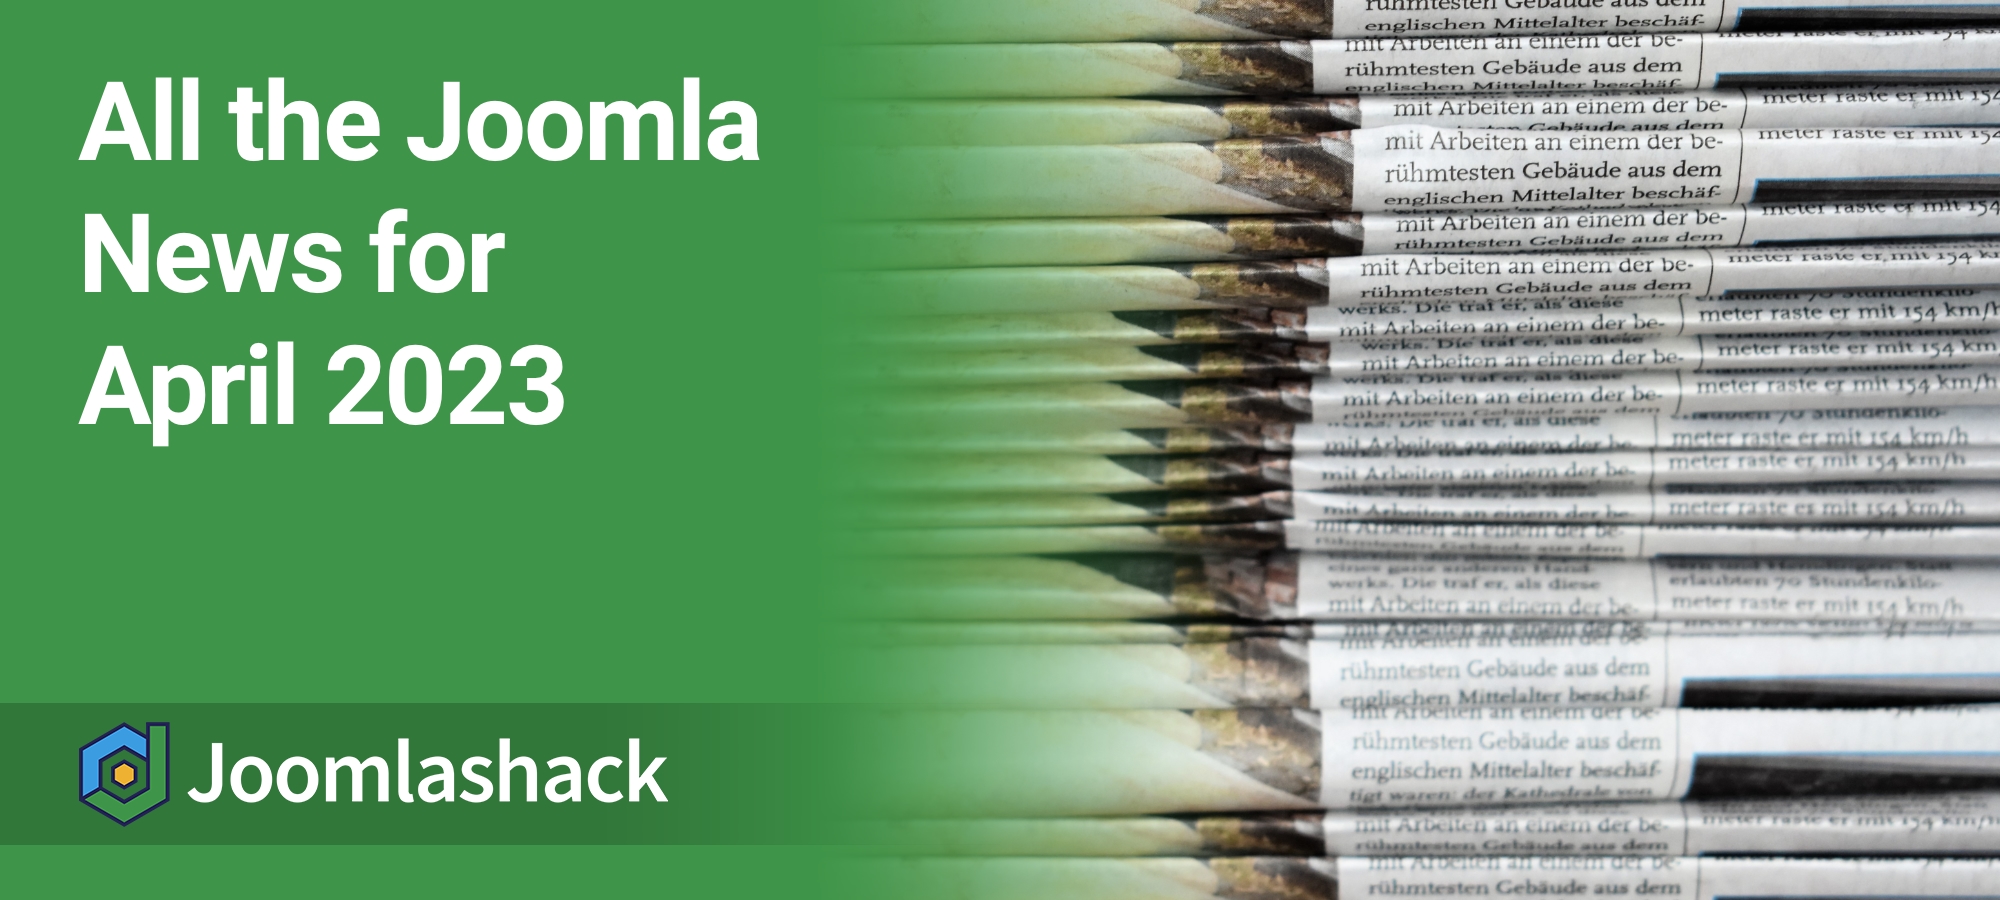 All the Joomla News for April 2023